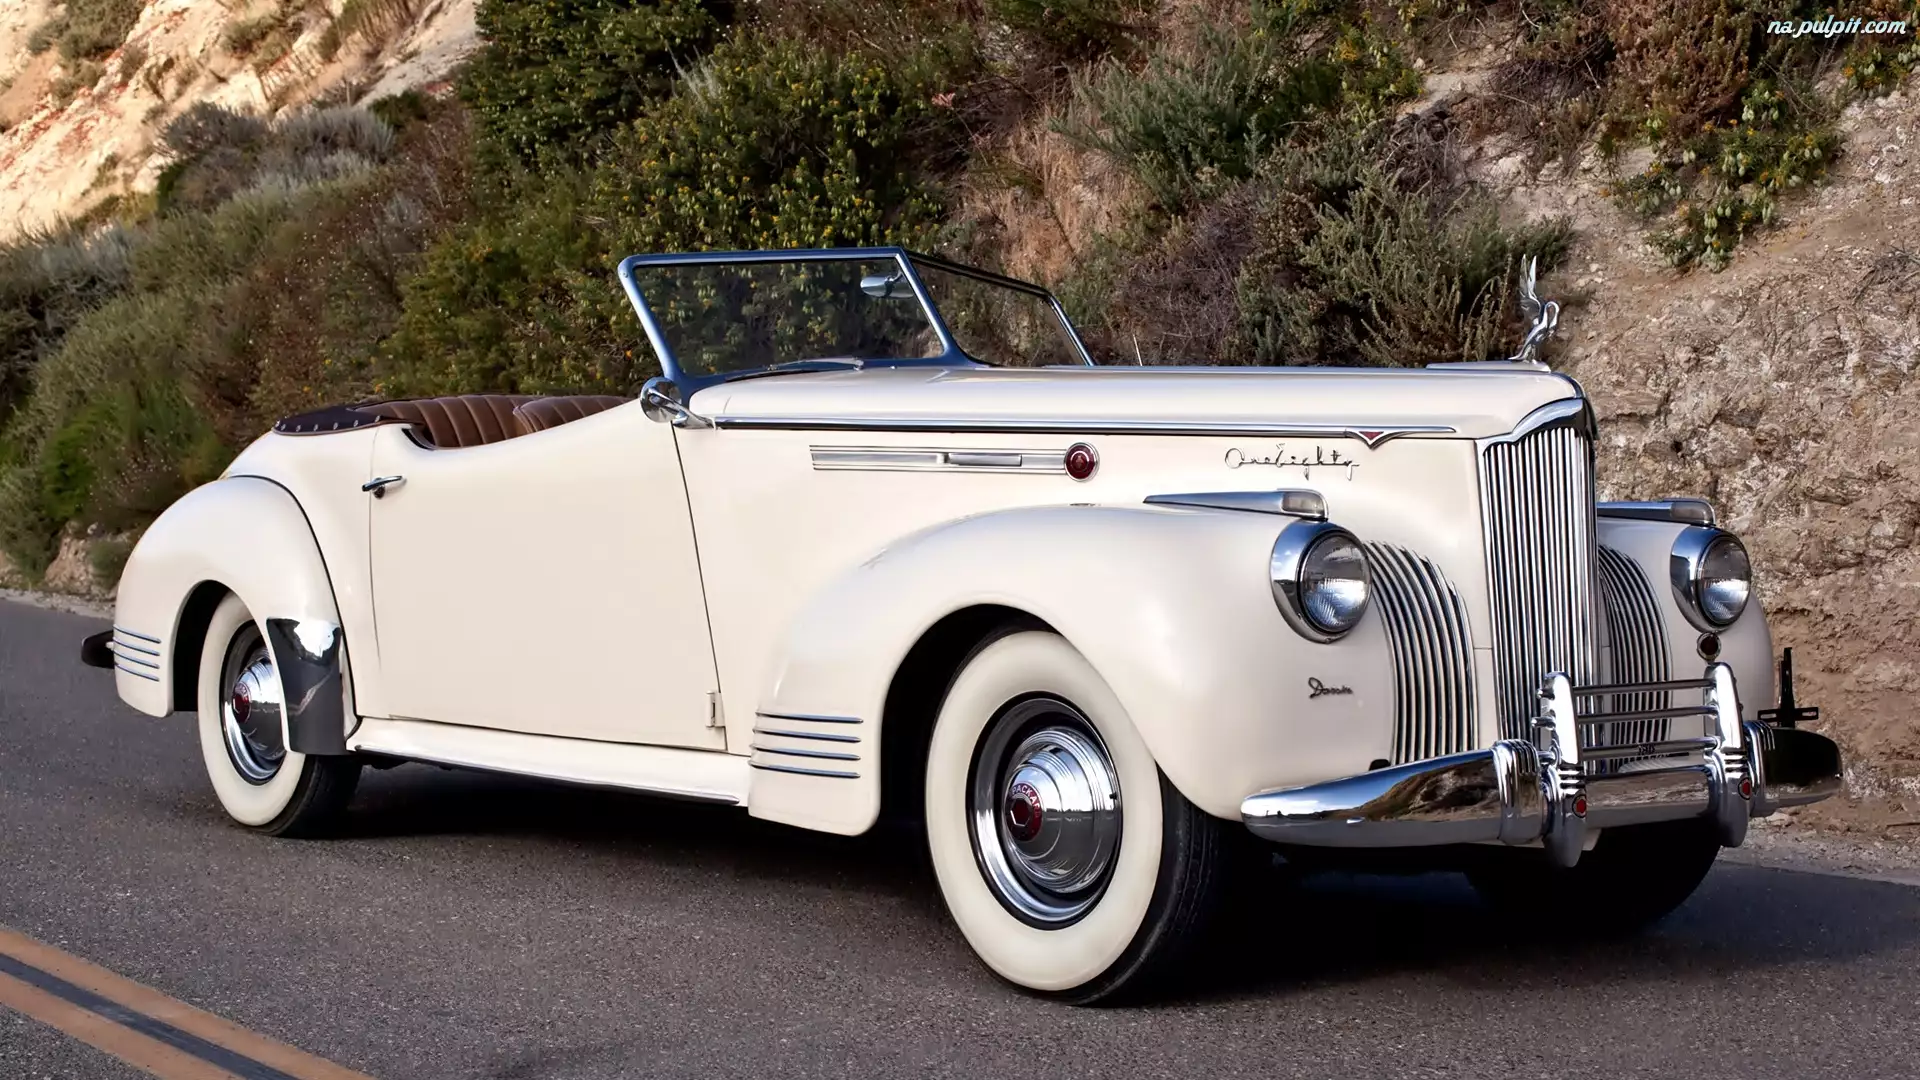 1941, Biały, Packard 180